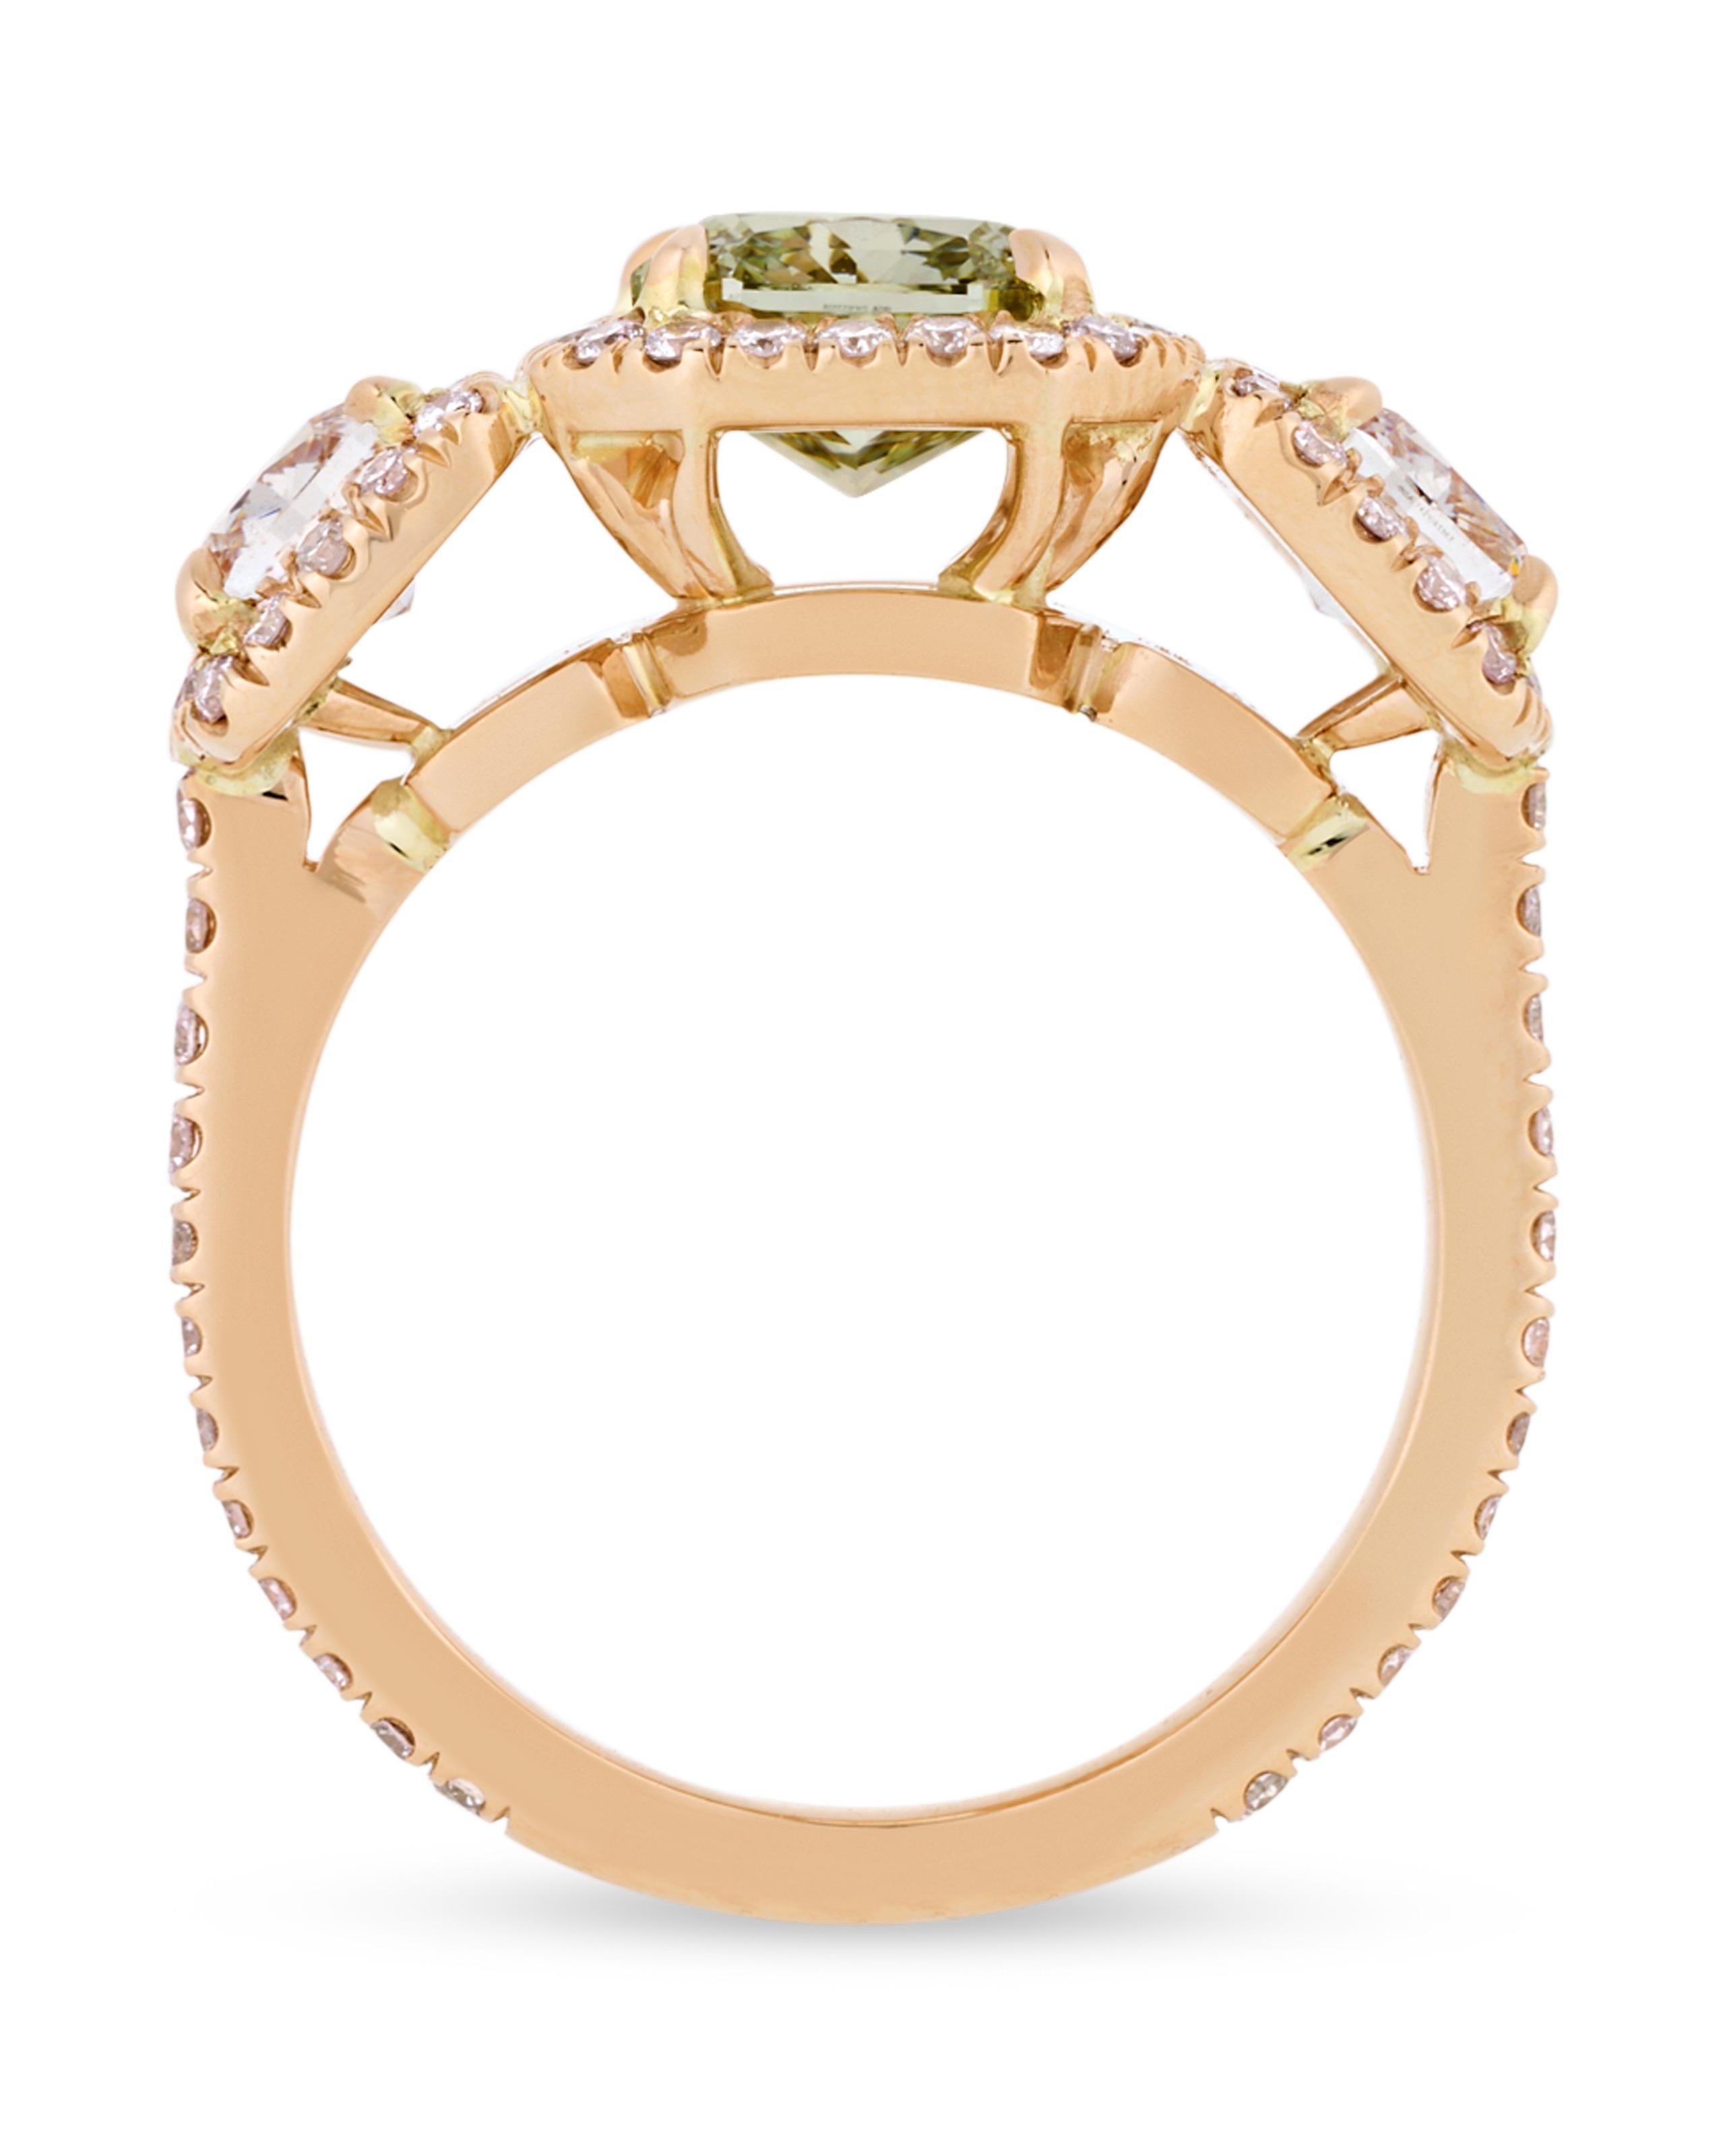 Modern Chameleon Diamond Ring, 1.73 Carats For Sale